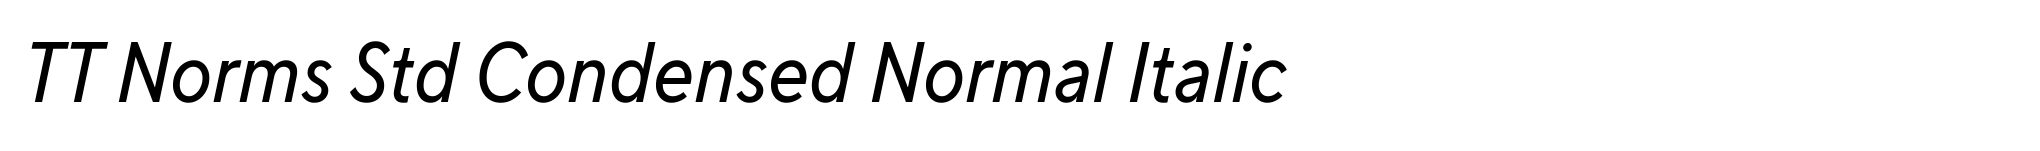 TT Norms Std Condensed Normal Italic image